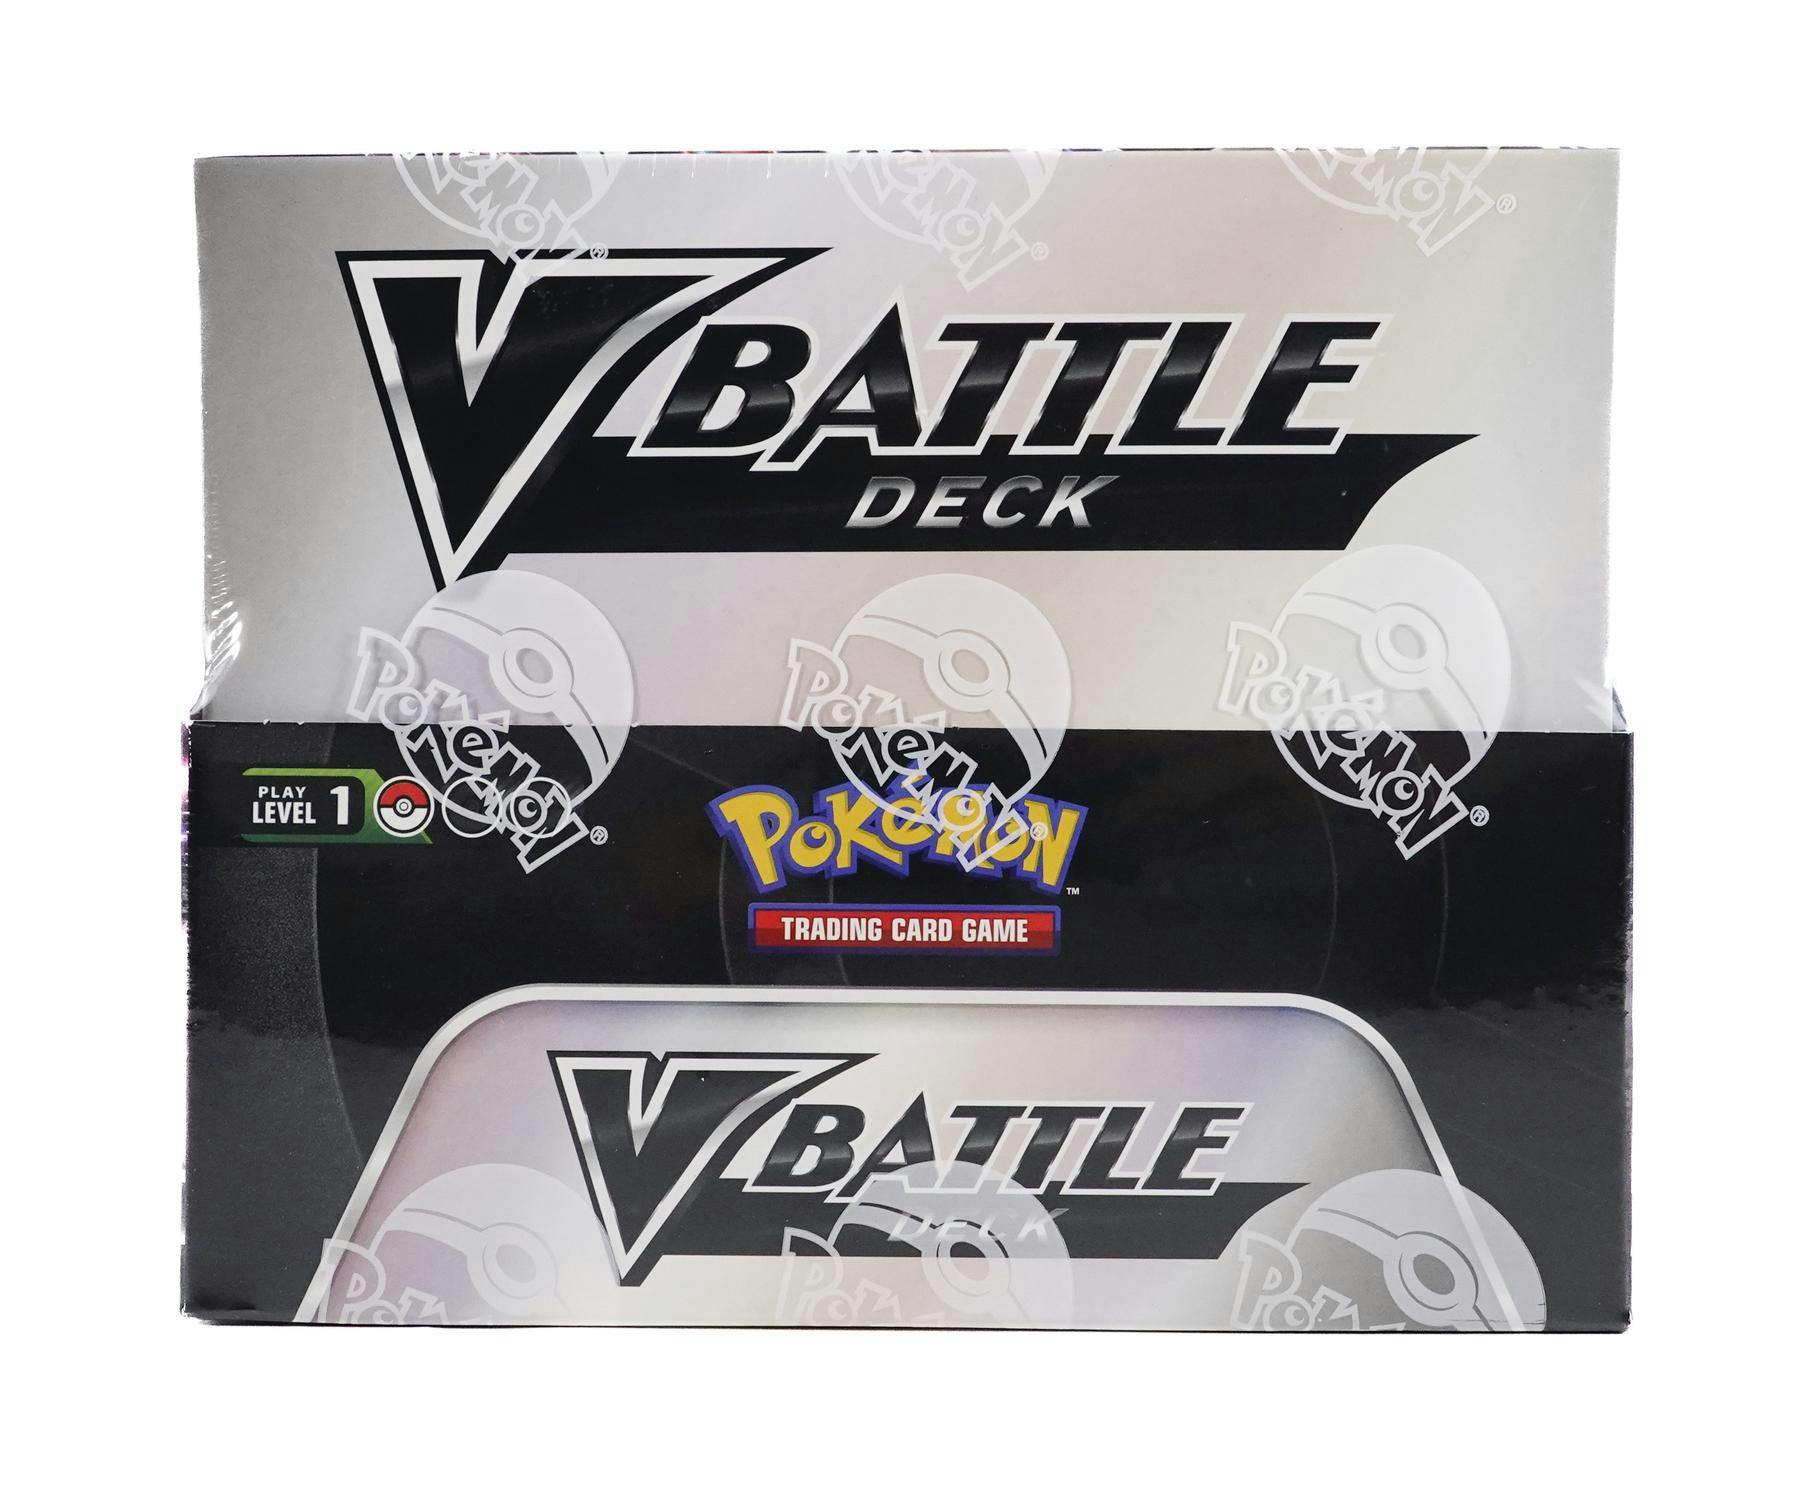 TCG Pokémon Battle Deck Deoxys V and Zeraora V